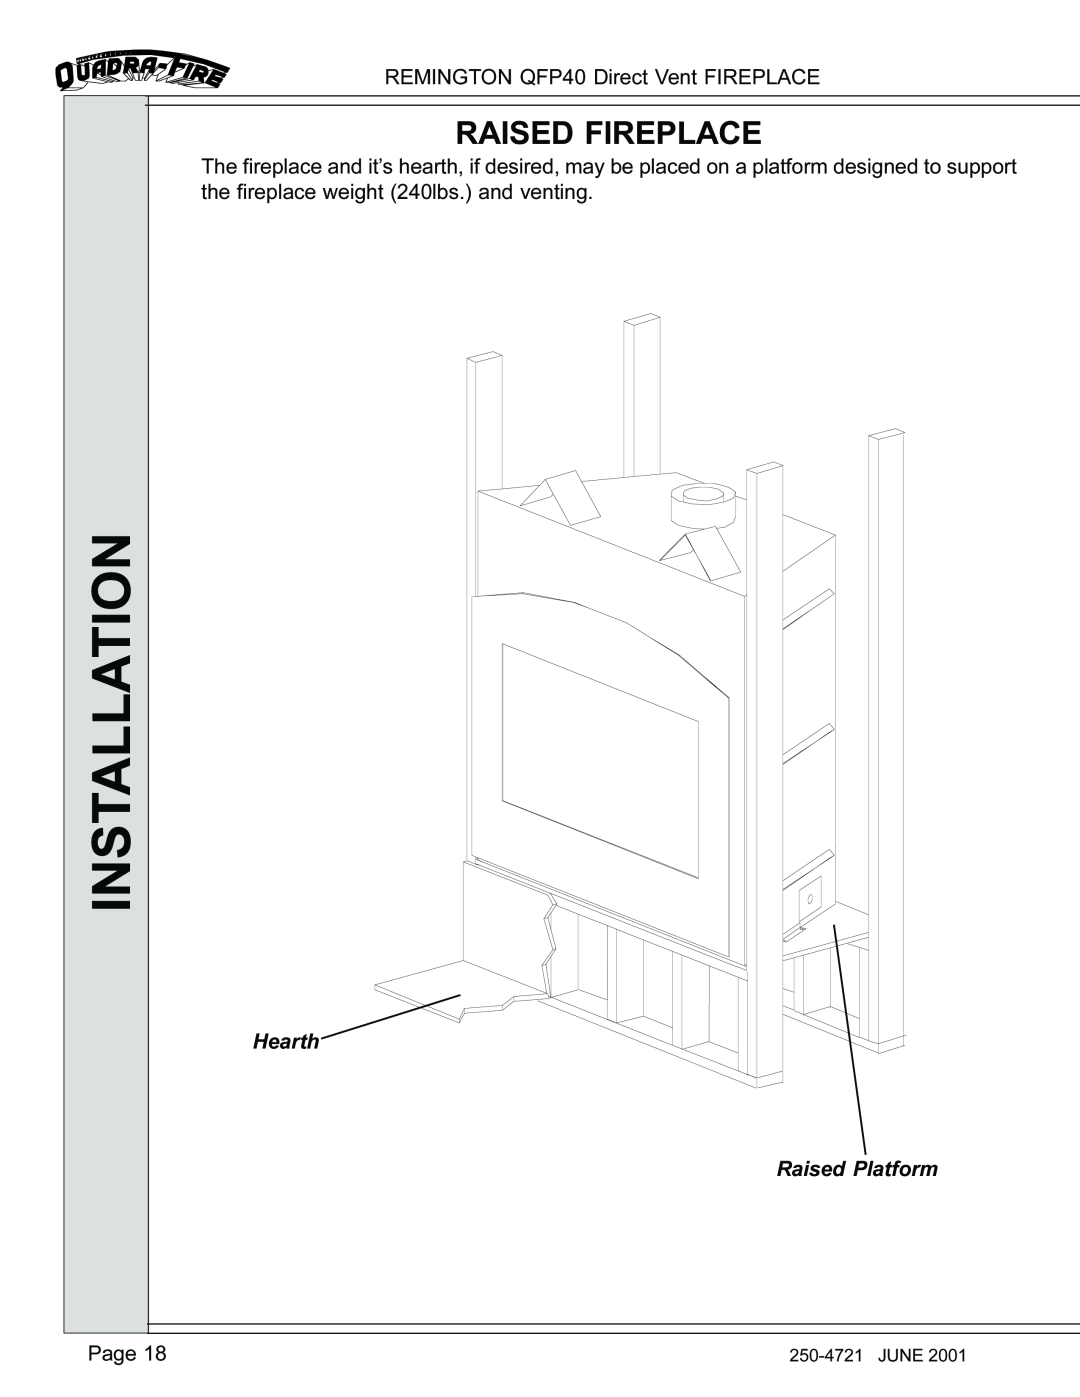 Remington manual Raised Fireplace, Installation, REMINGTON QFP40 Direct Vent FIREPLACE, Hearth Raised Platform, Page 